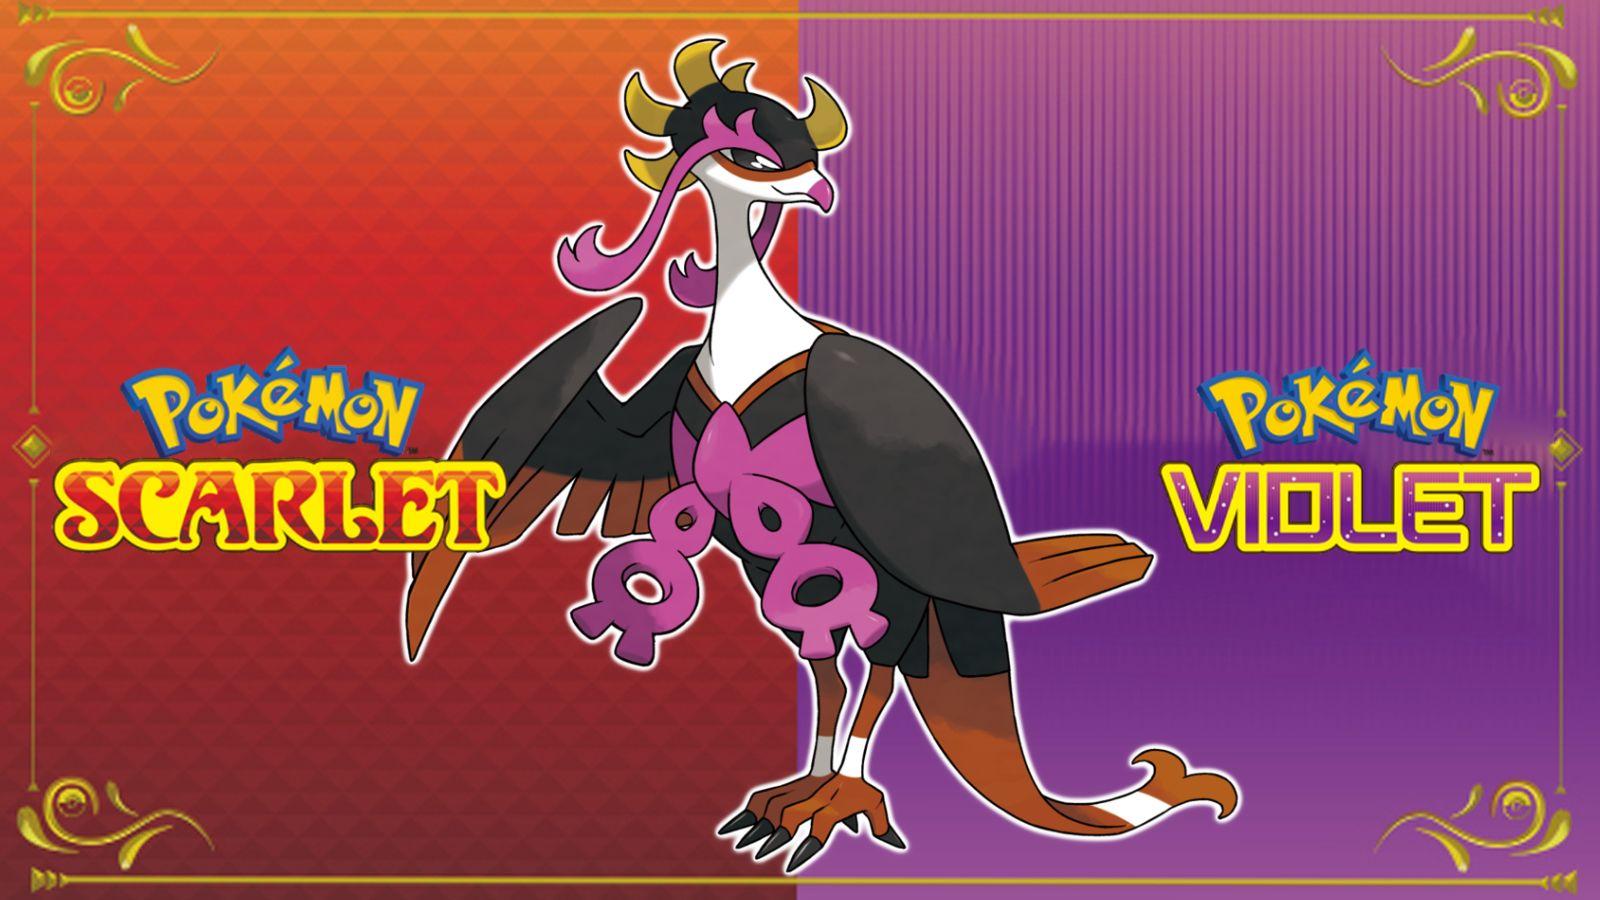 Pokémon Scarlet & Violet: The Teal Mask DLC Walkthrough - The Final Battles